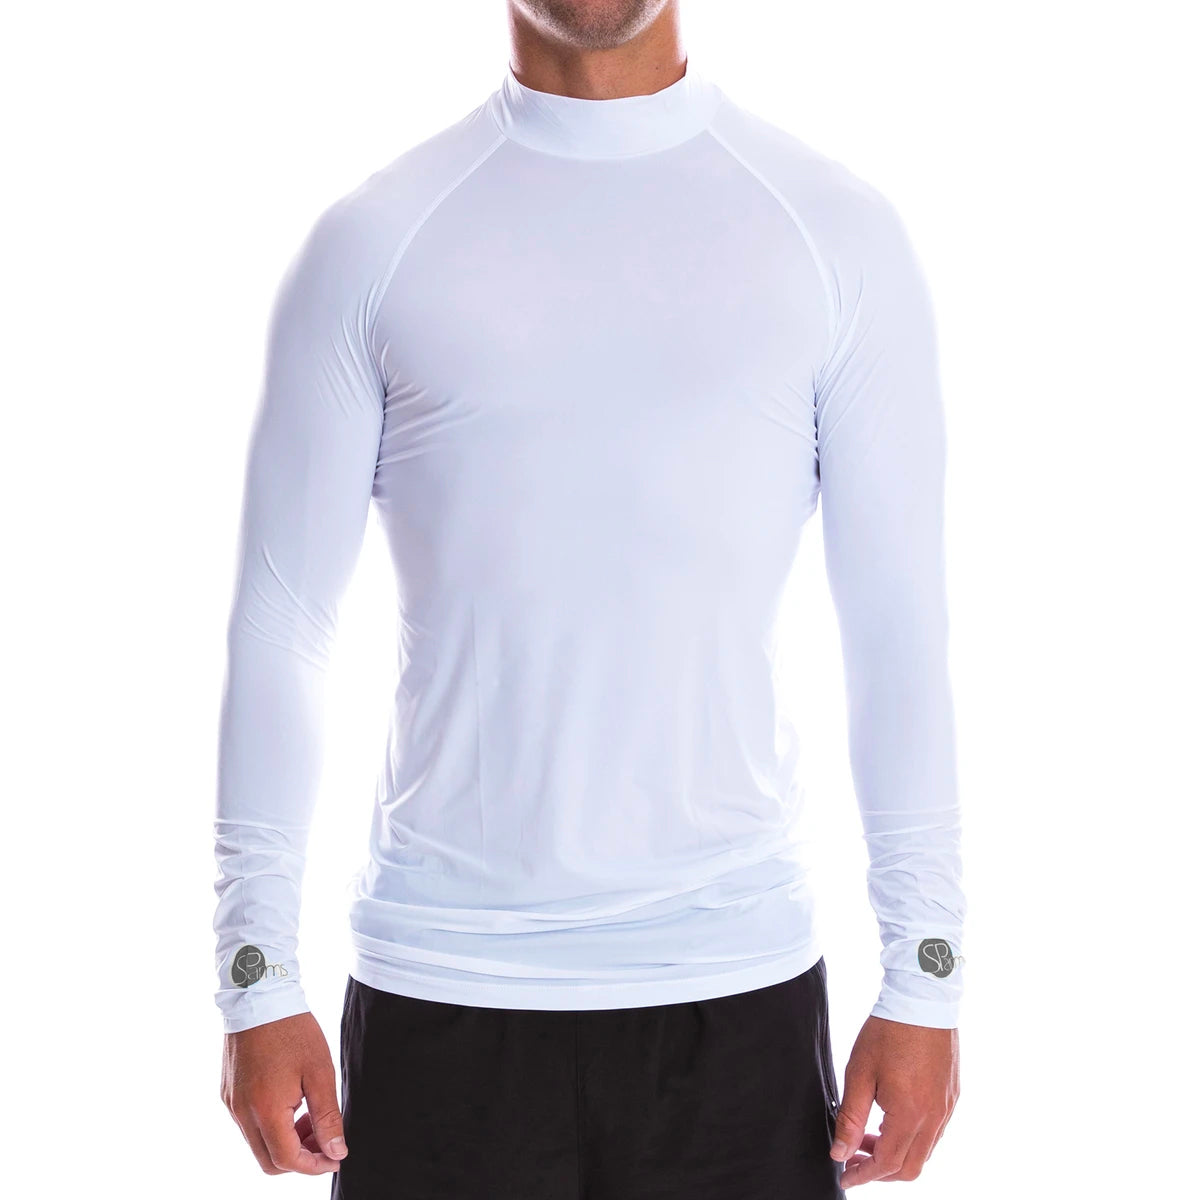 SParms Golf Sun Protection Body High Neck Shirt White Small, Men's